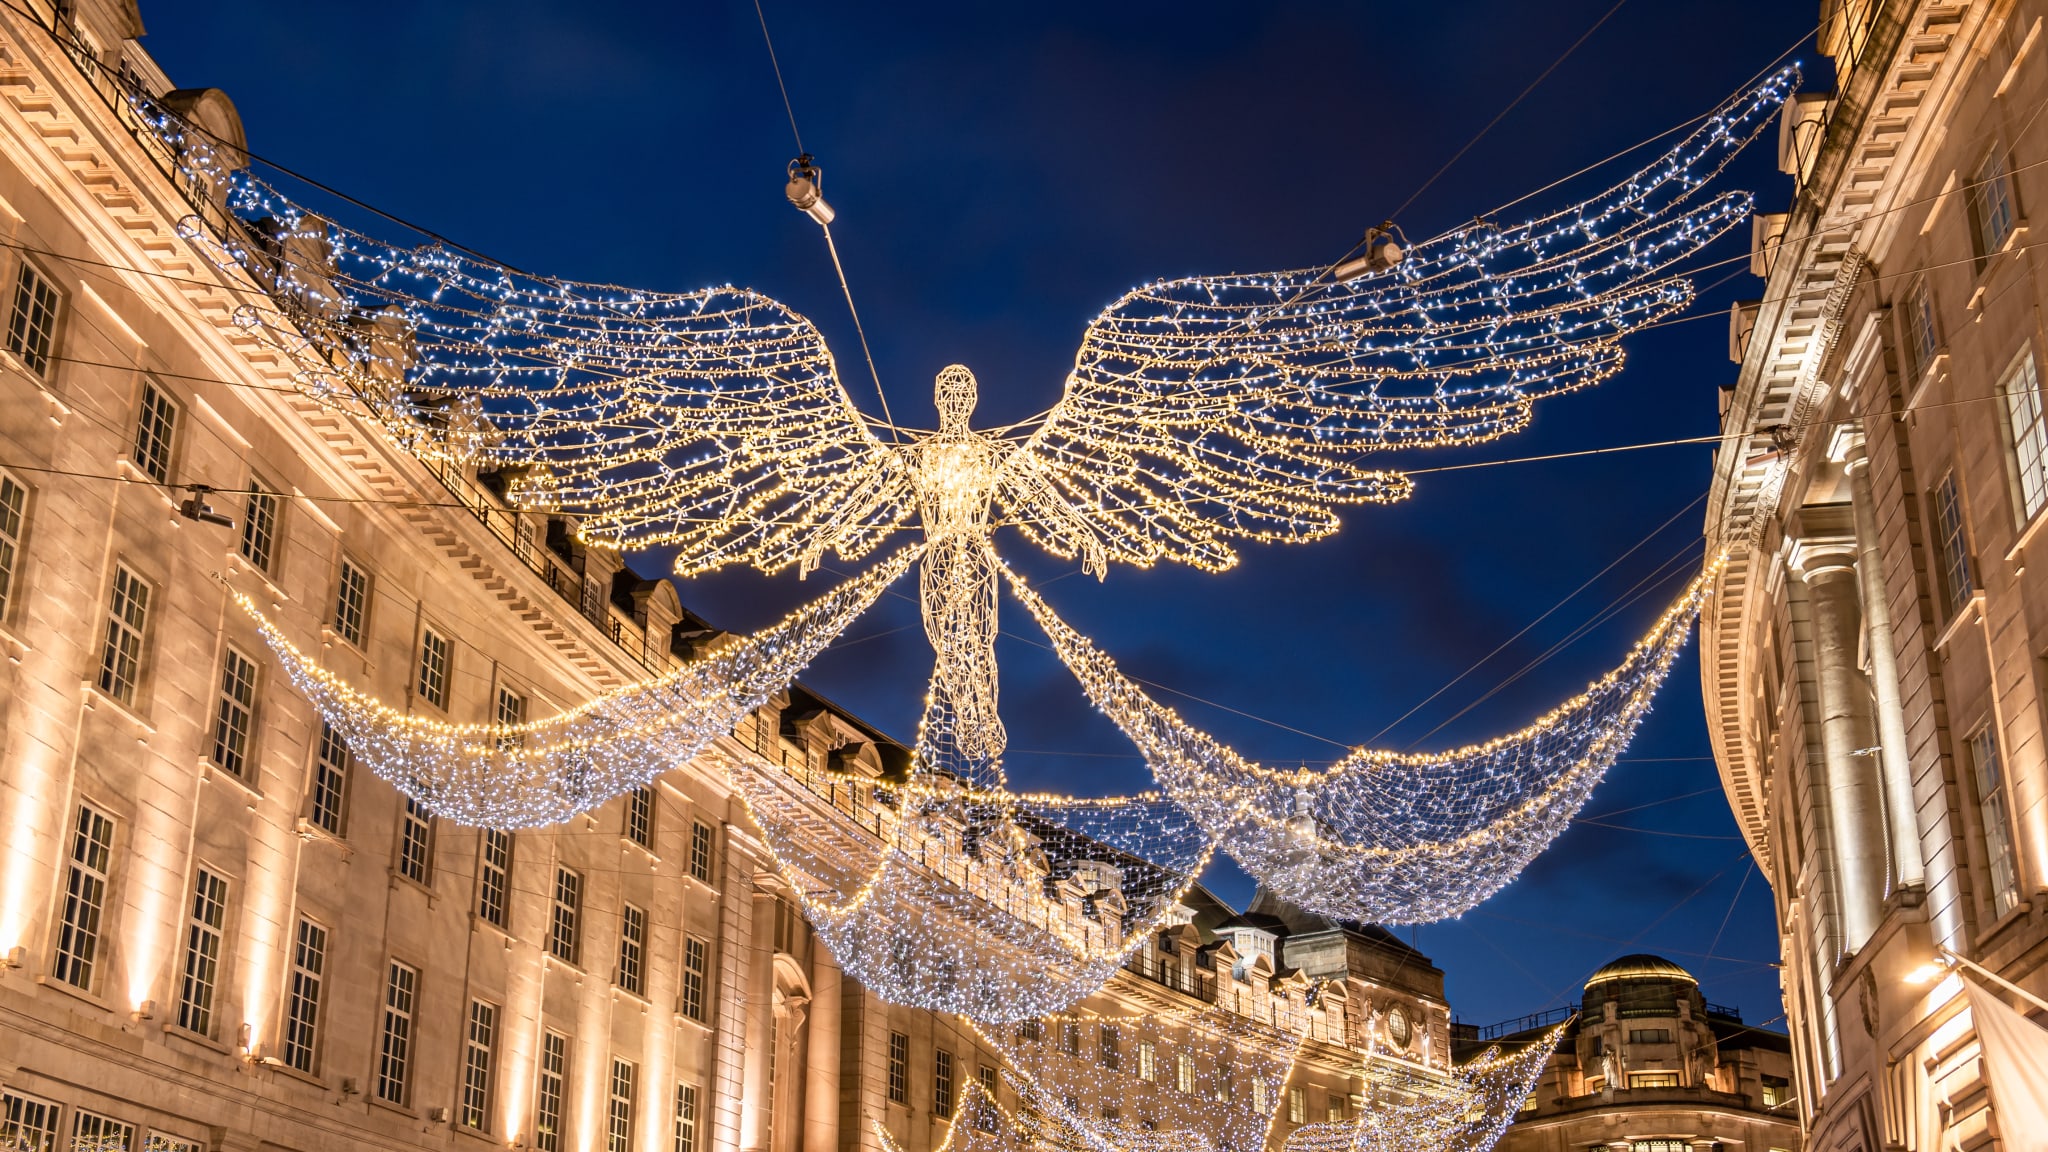 Engel in Form von Dekorationen auf Regent Street©/ Cristian Mircea Balate/ iStock / Getty Images Plus via Getty Images